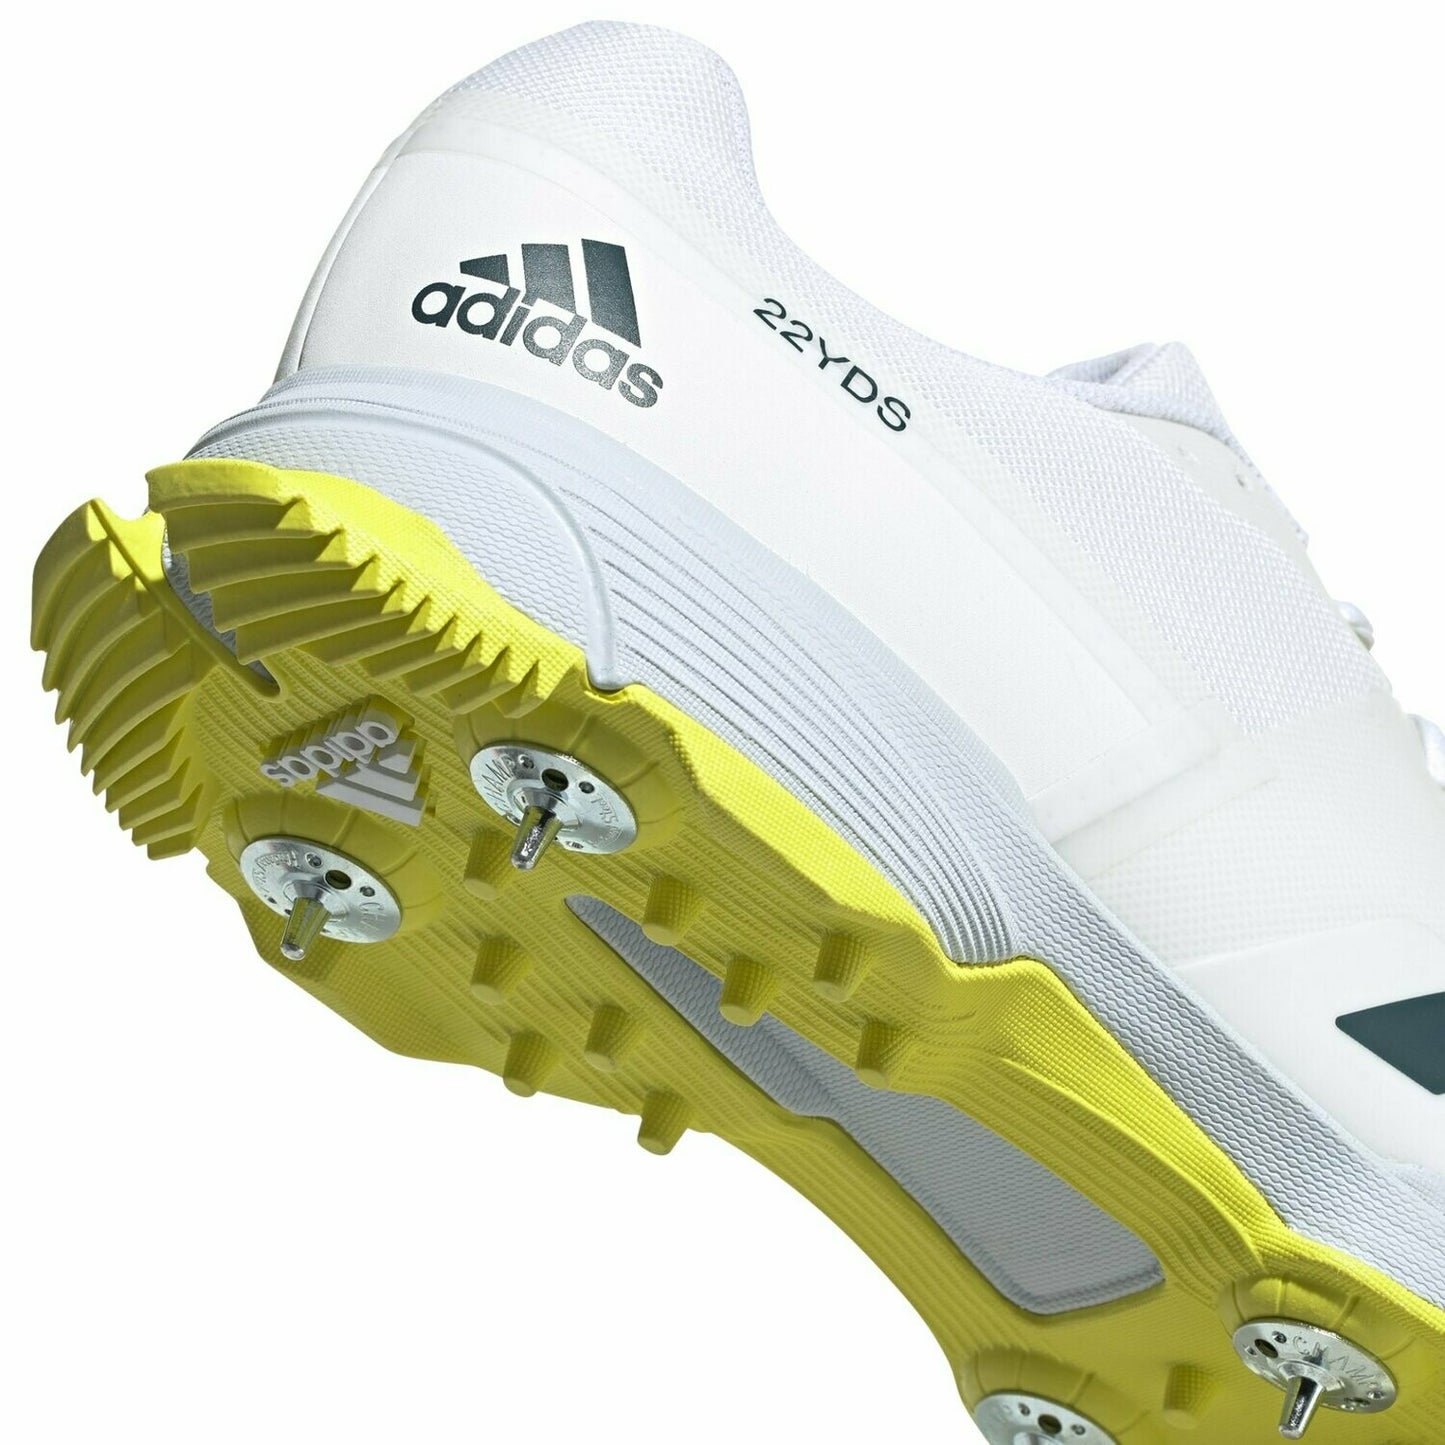 Adidas 22yds Cricket Spike White/Acid Yellow